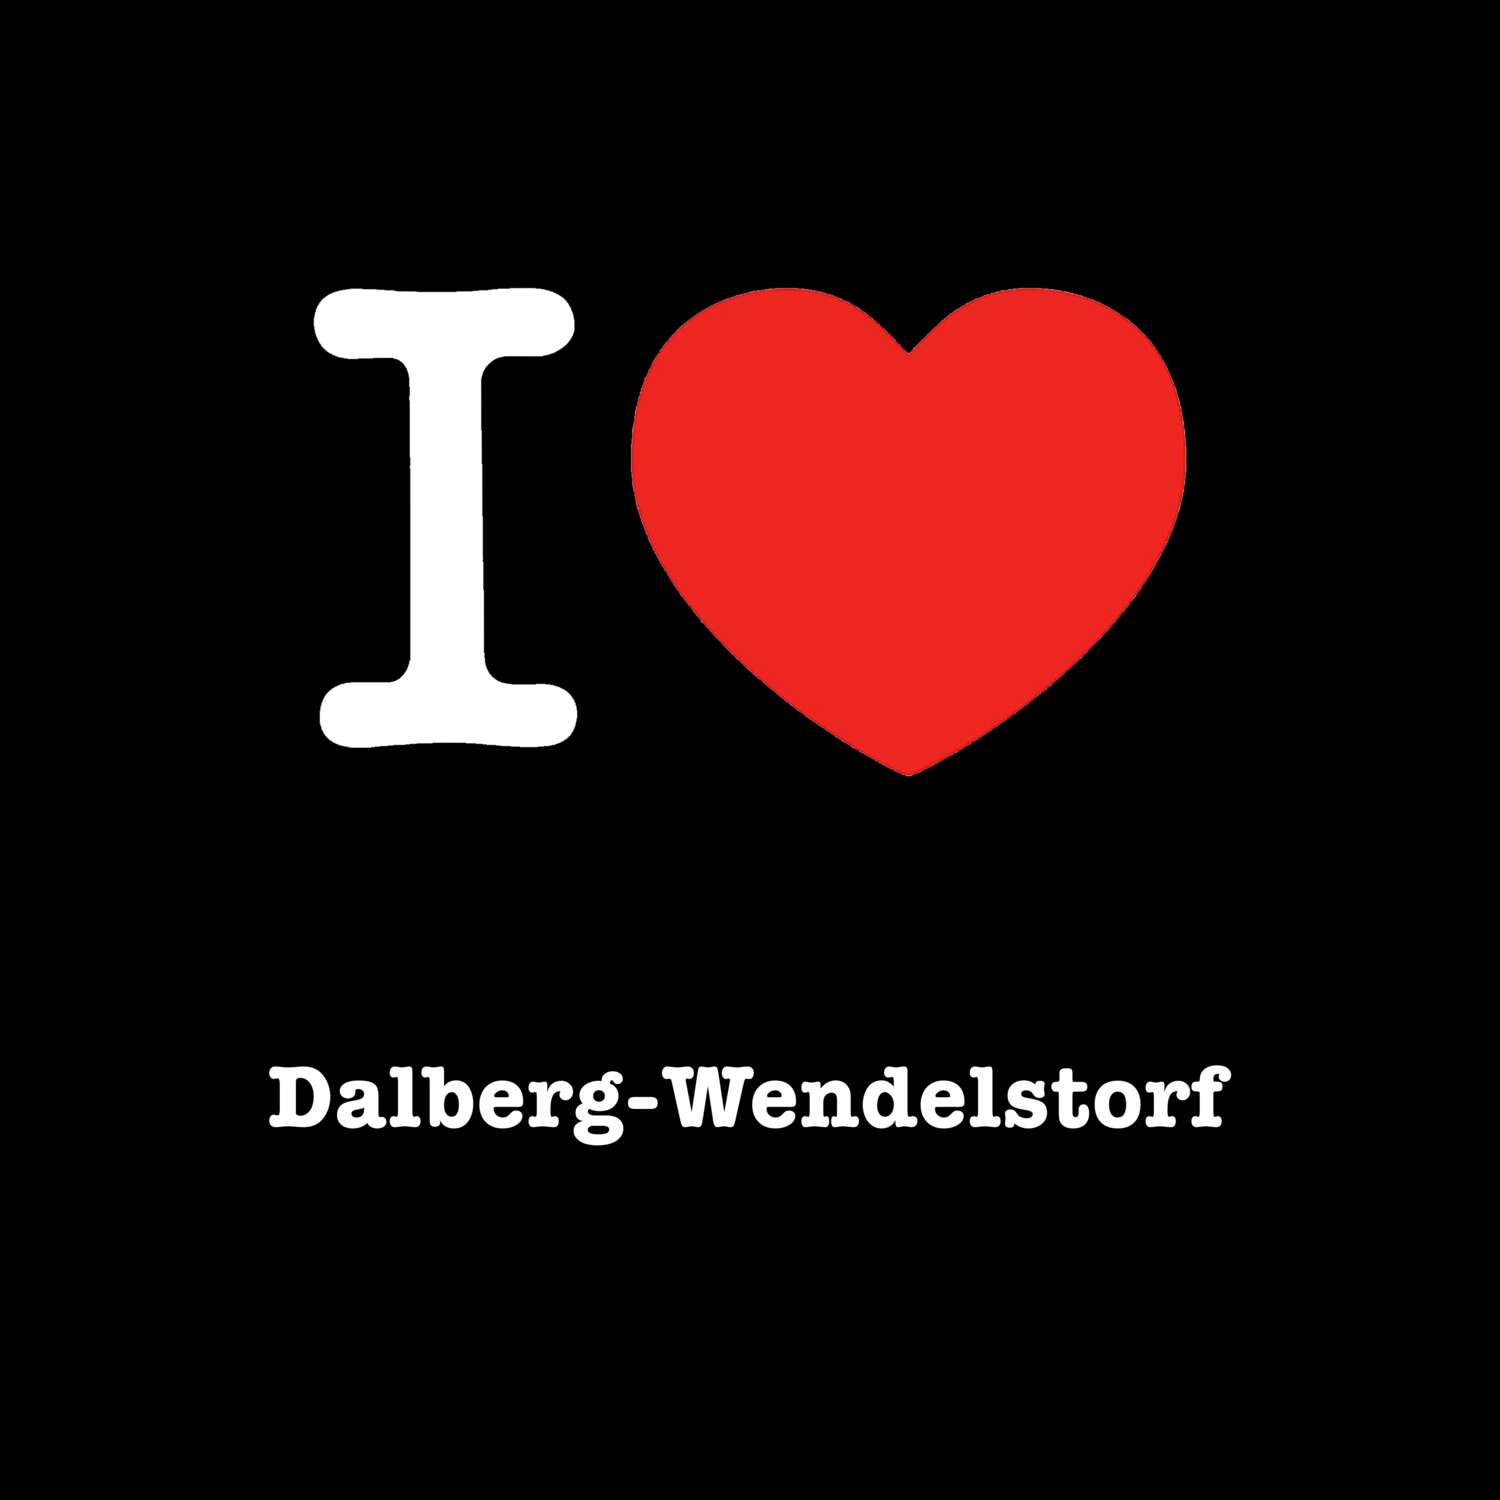 Dalberg-Wendelstorf T-Shirt »I love«